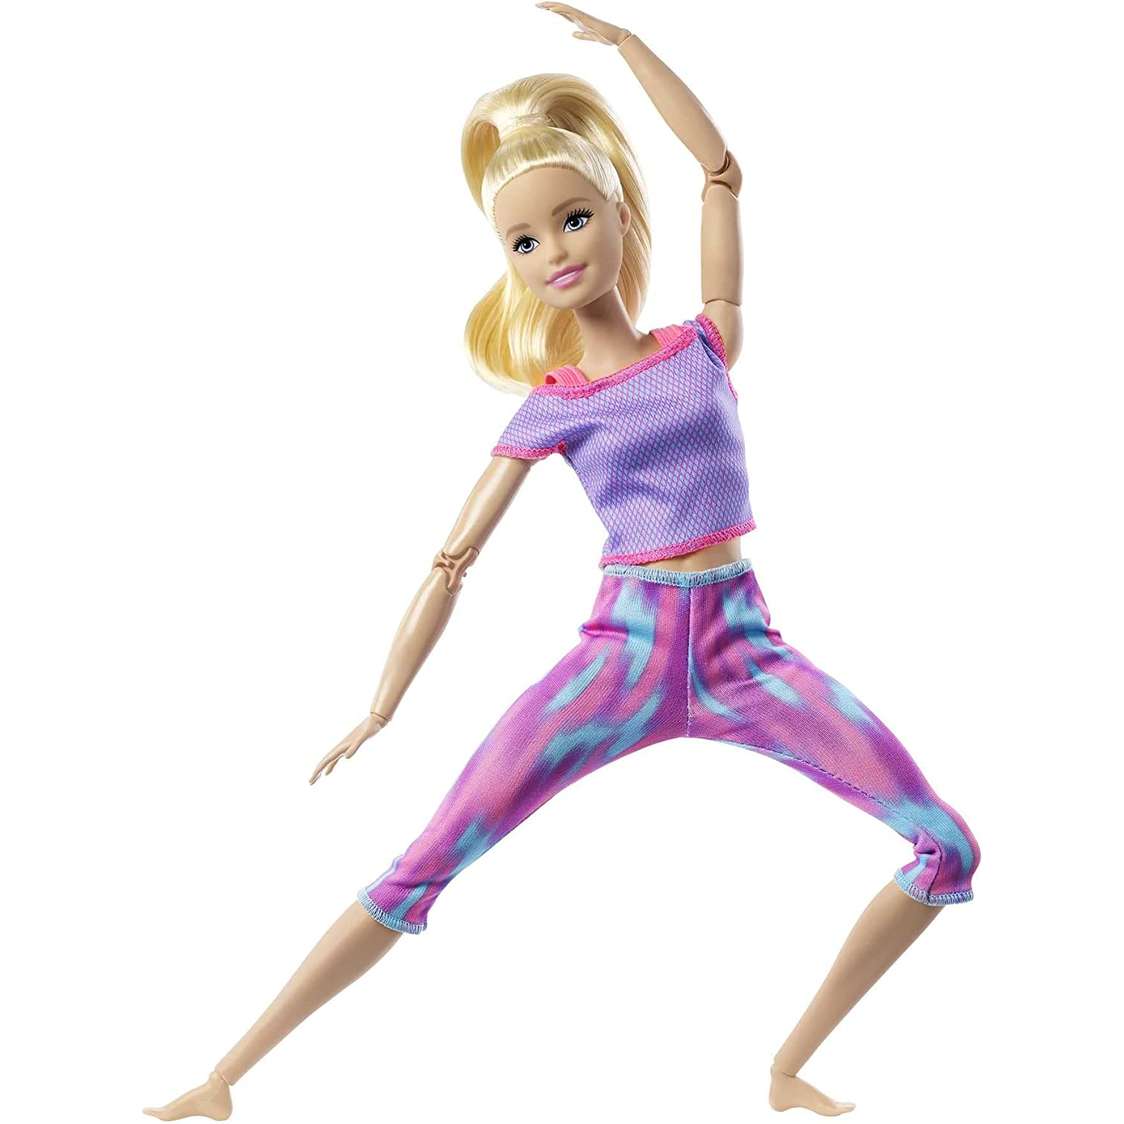 Barbie bionda snodata sport - Mago Biribago Giocattoli